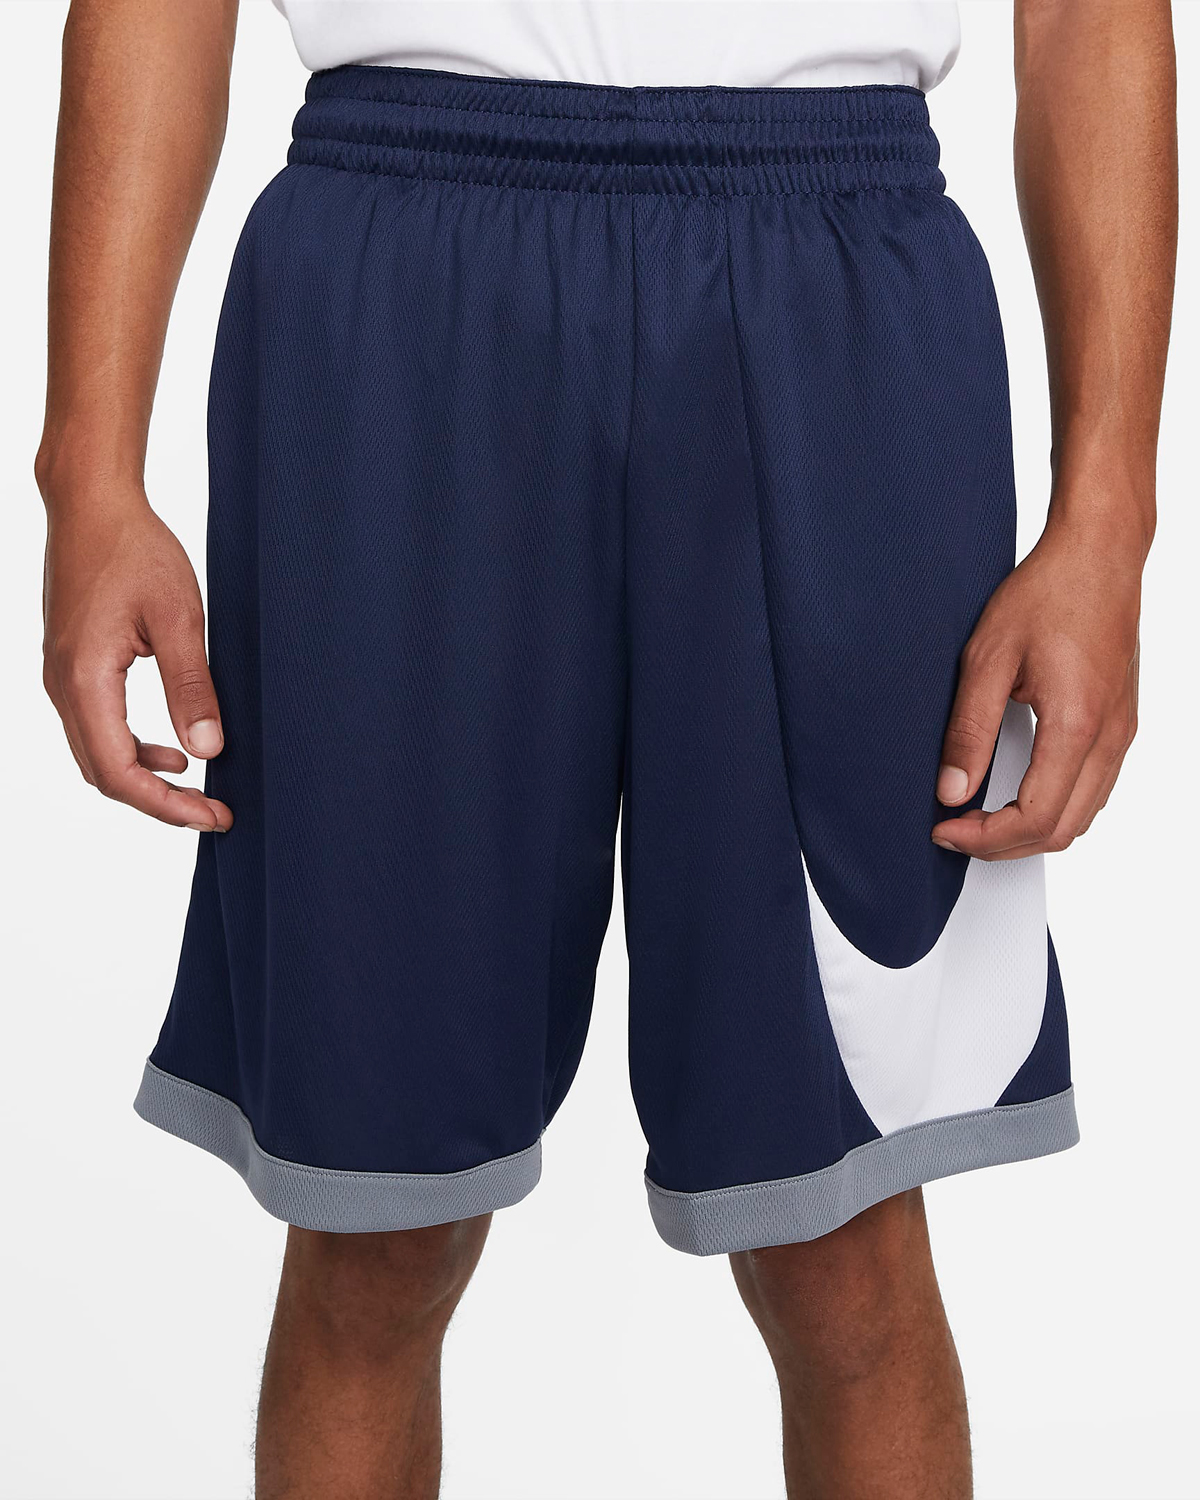 Nike-Basketball-Shorts-Midnight-Navy-Cool-Grey-White